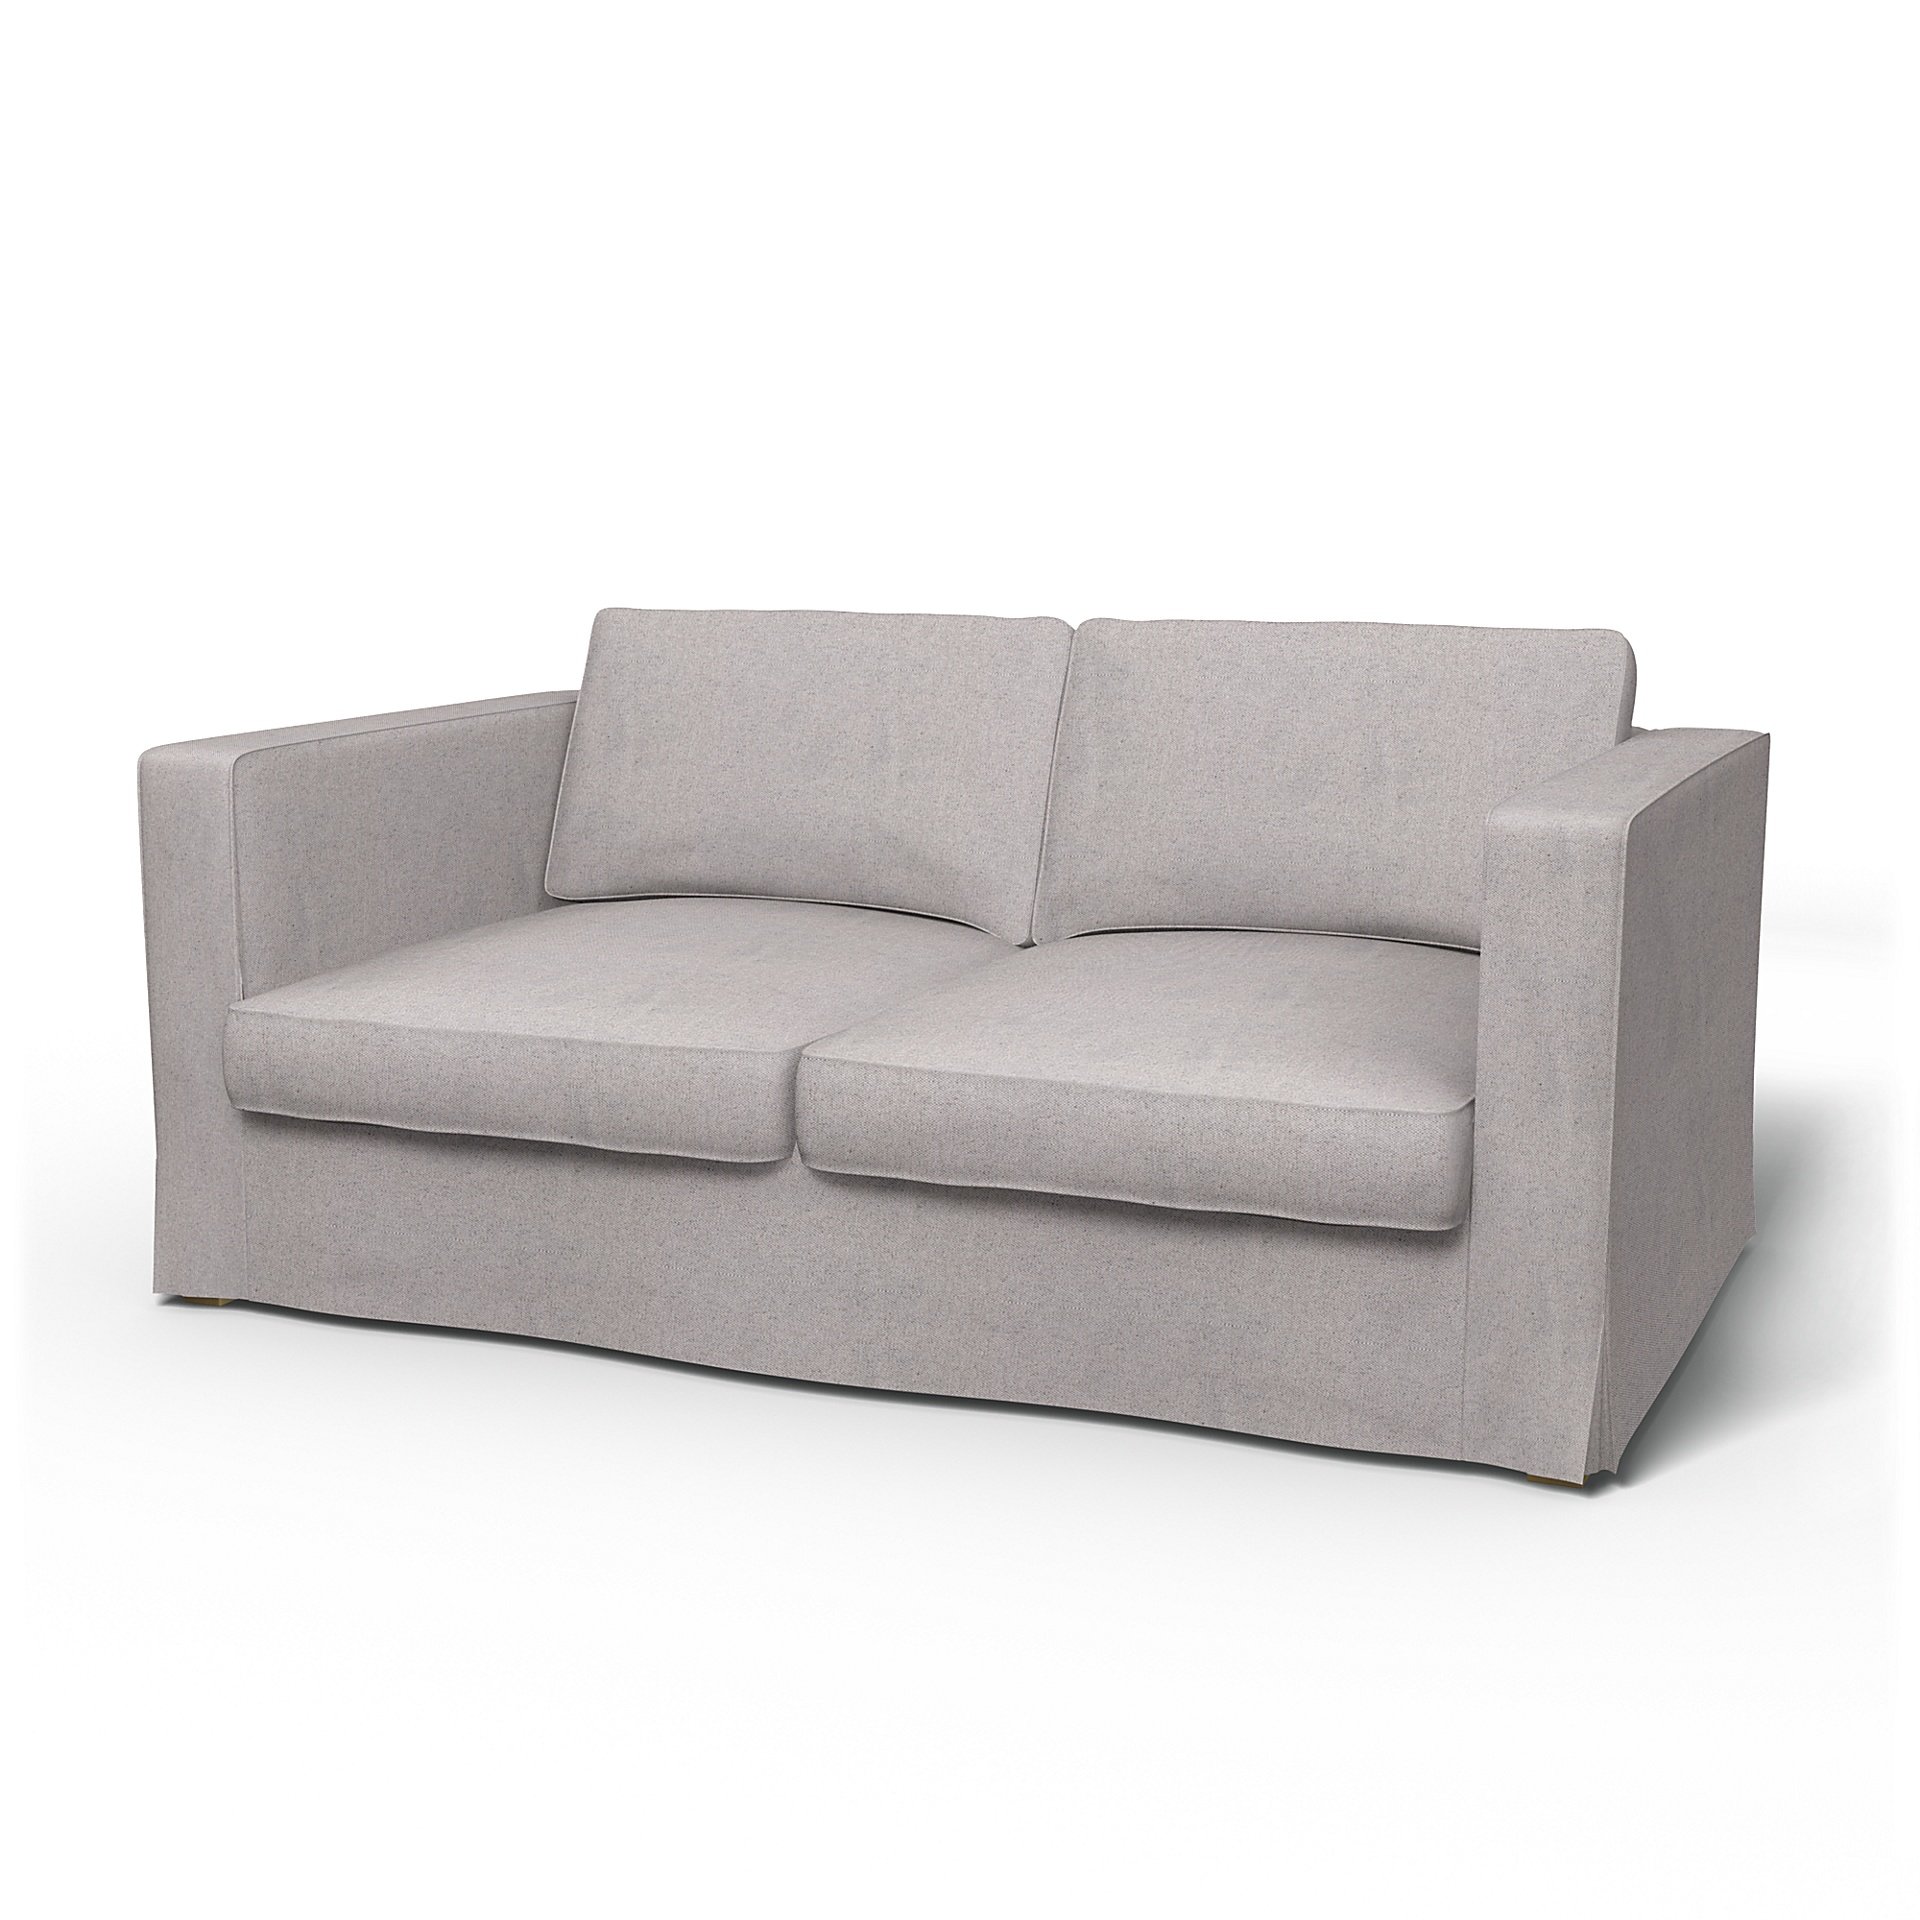 IKEA - Karlstad 2 Seater Sofa Cover, Natural, Cotton - Bemz